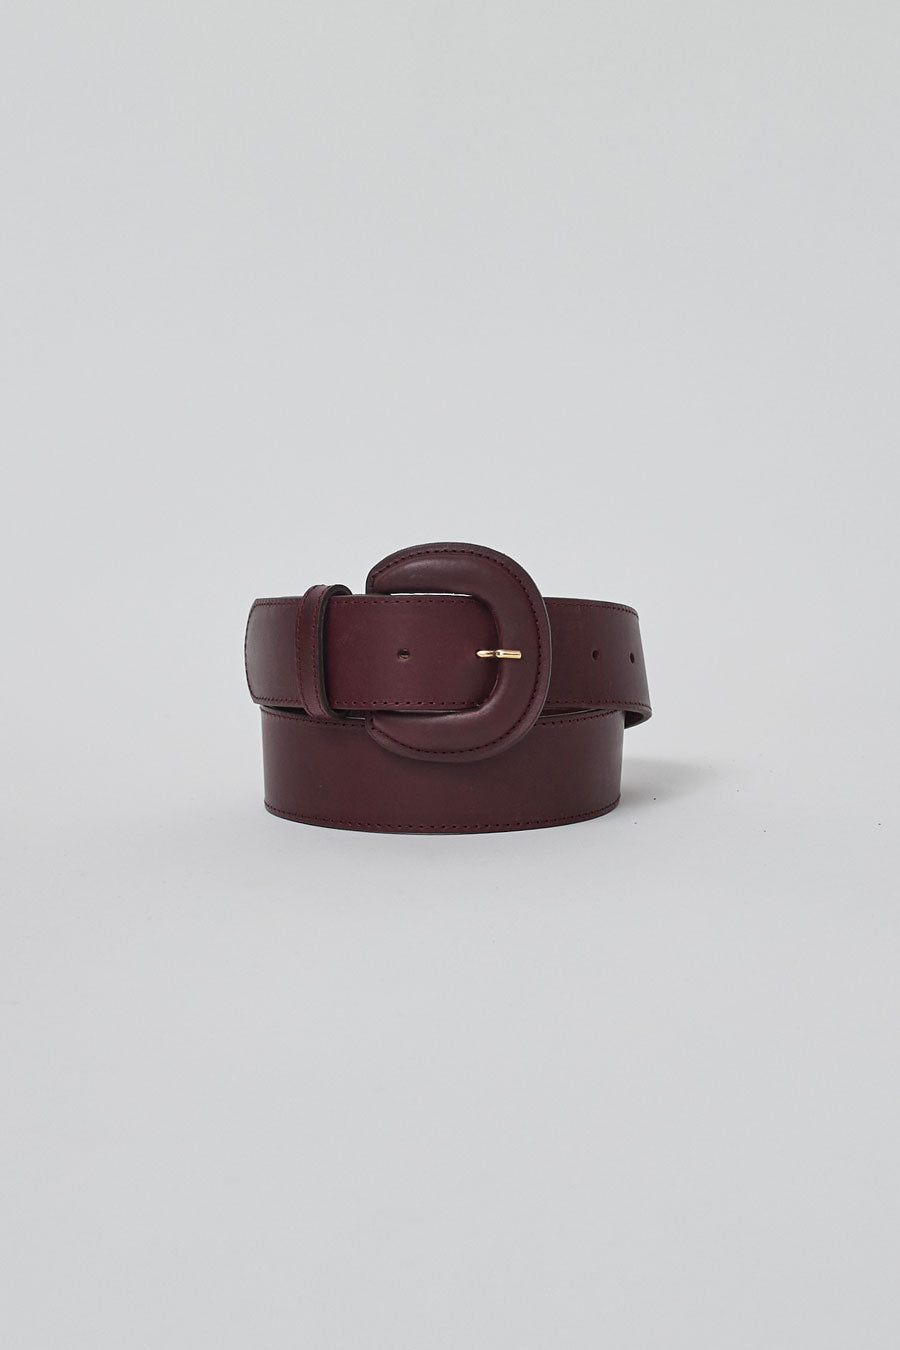 LV Printed Leather Belt » Buy online from ShopnSafe